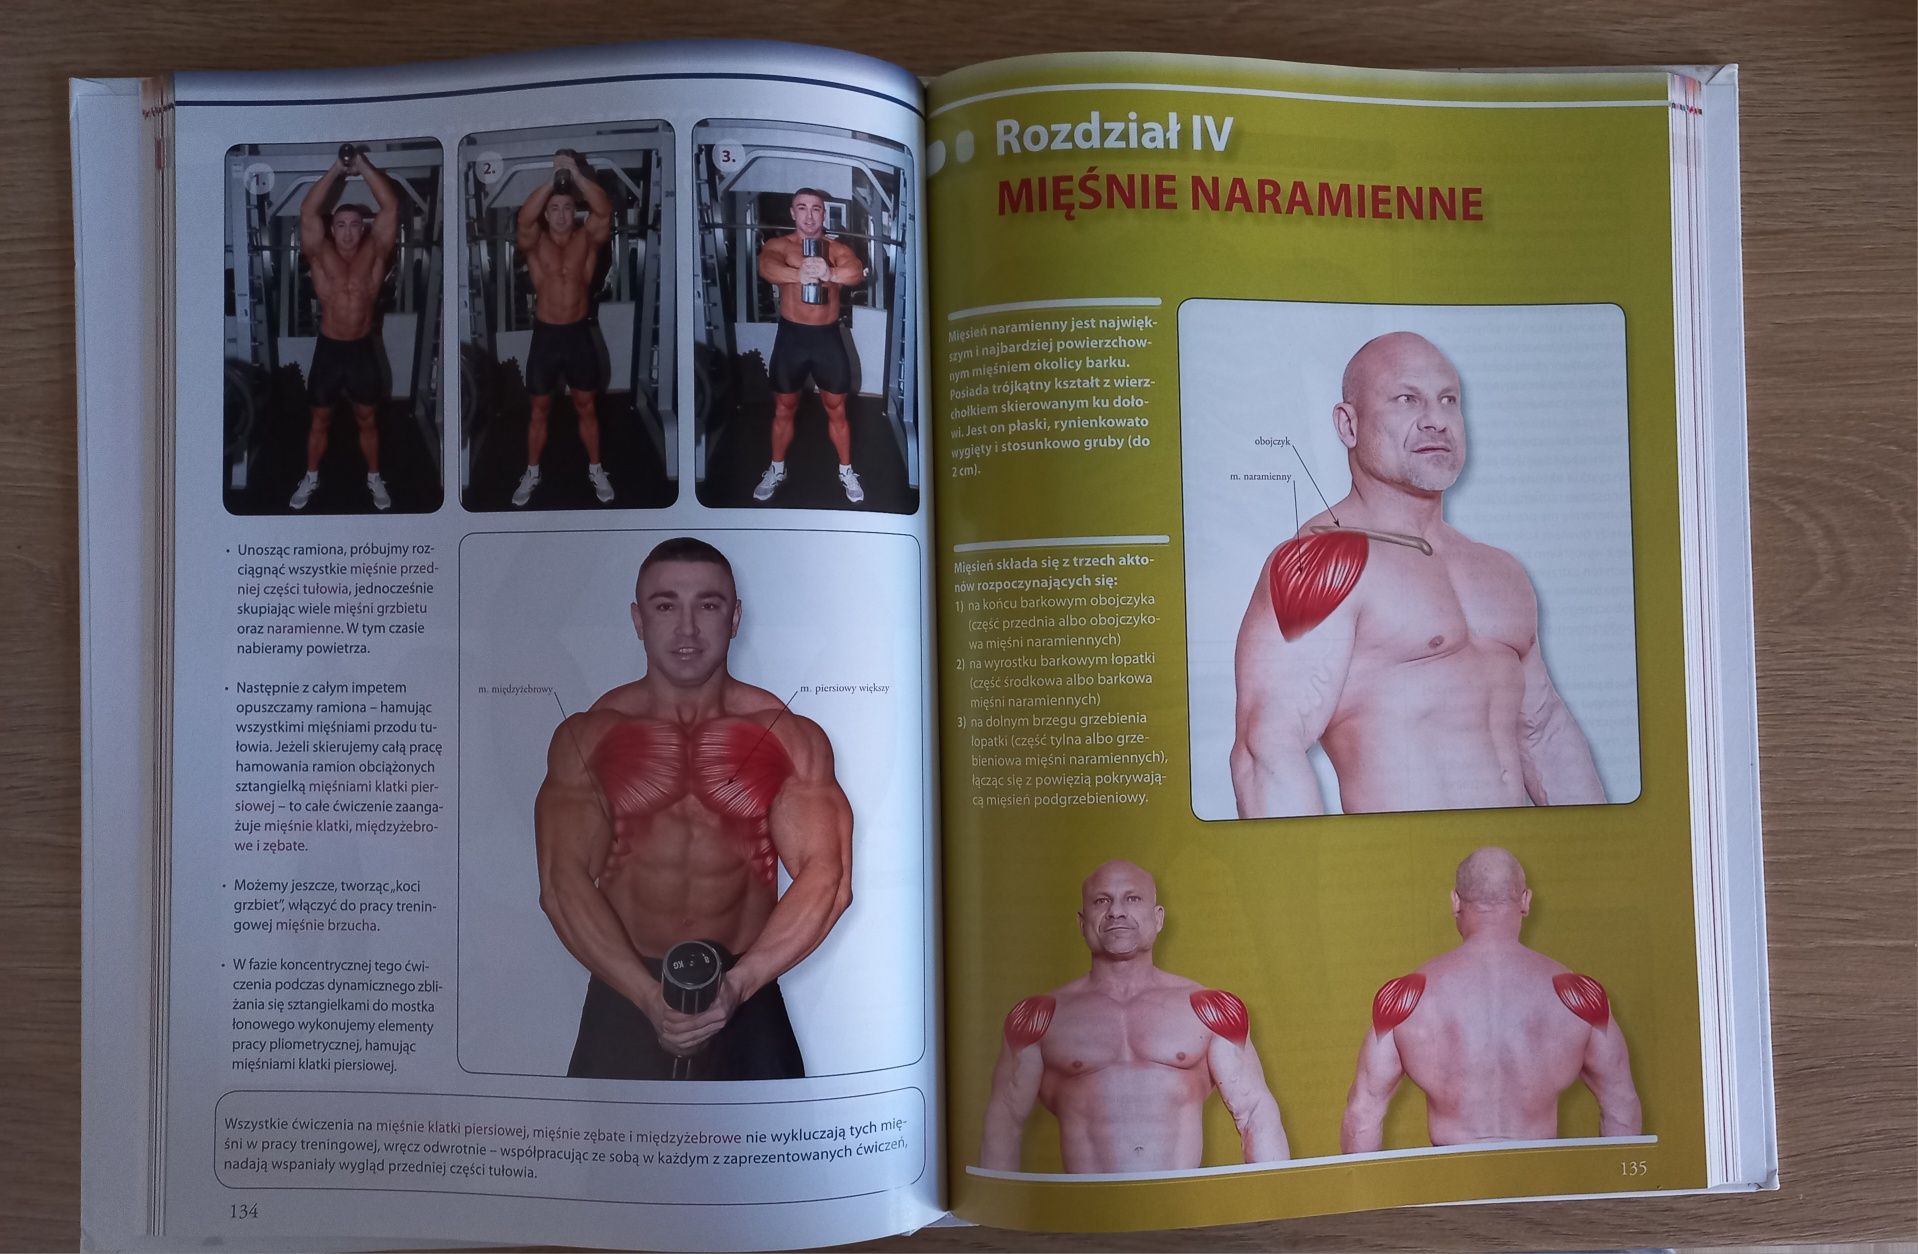 KULTURYSTYKA Muscle IQ Anatomia treningu siłowego Leszek Michalski